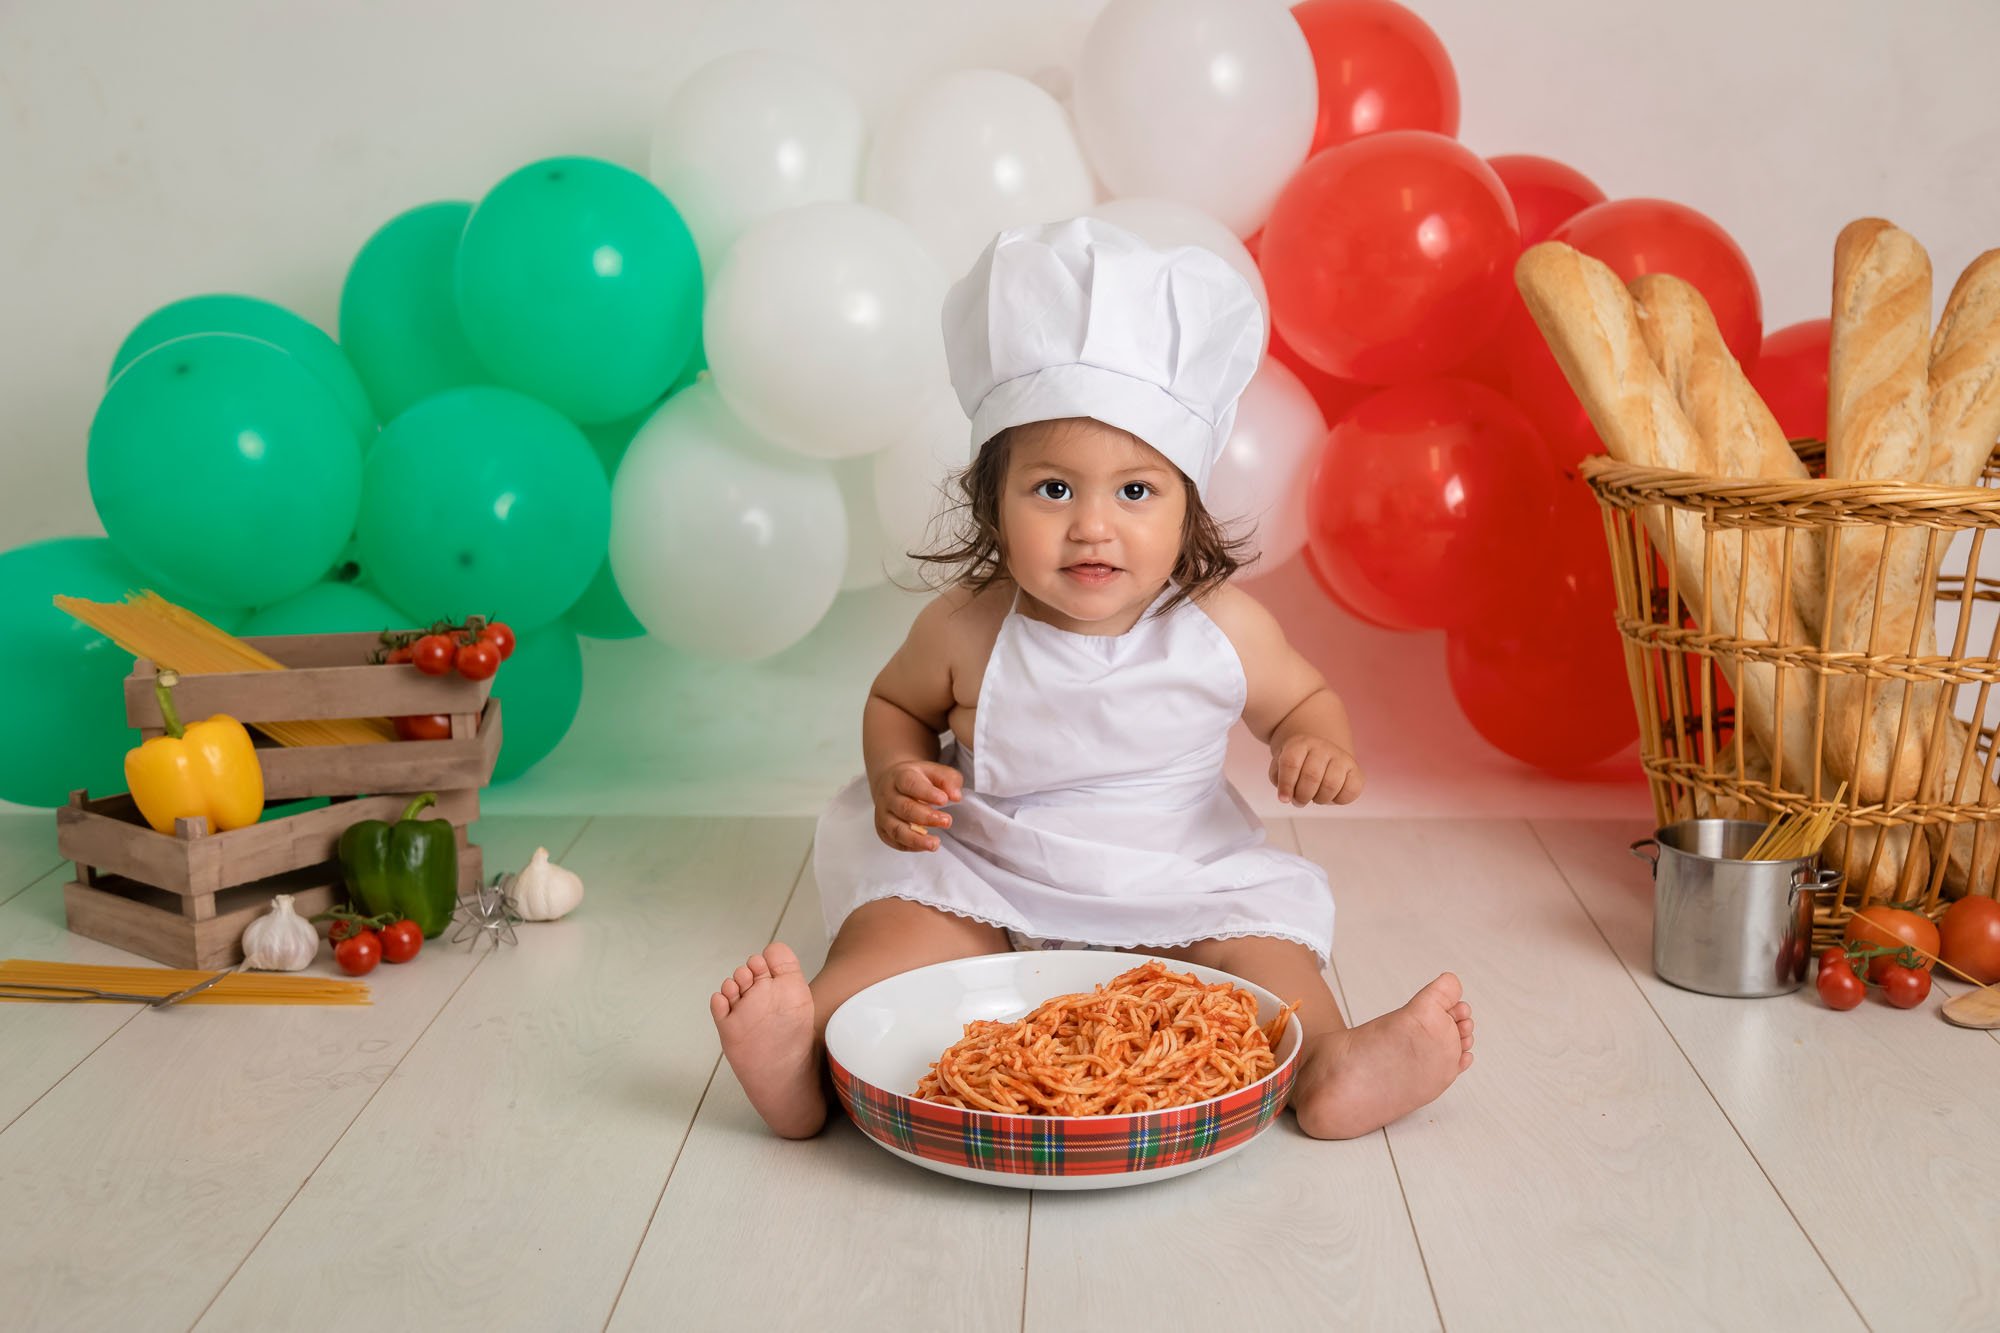 cakesmash-photography-in-leeds-baby-girl-spag-bol-smash-italy-breadsticks-spaghtetti-apron-chef-hat.jpg